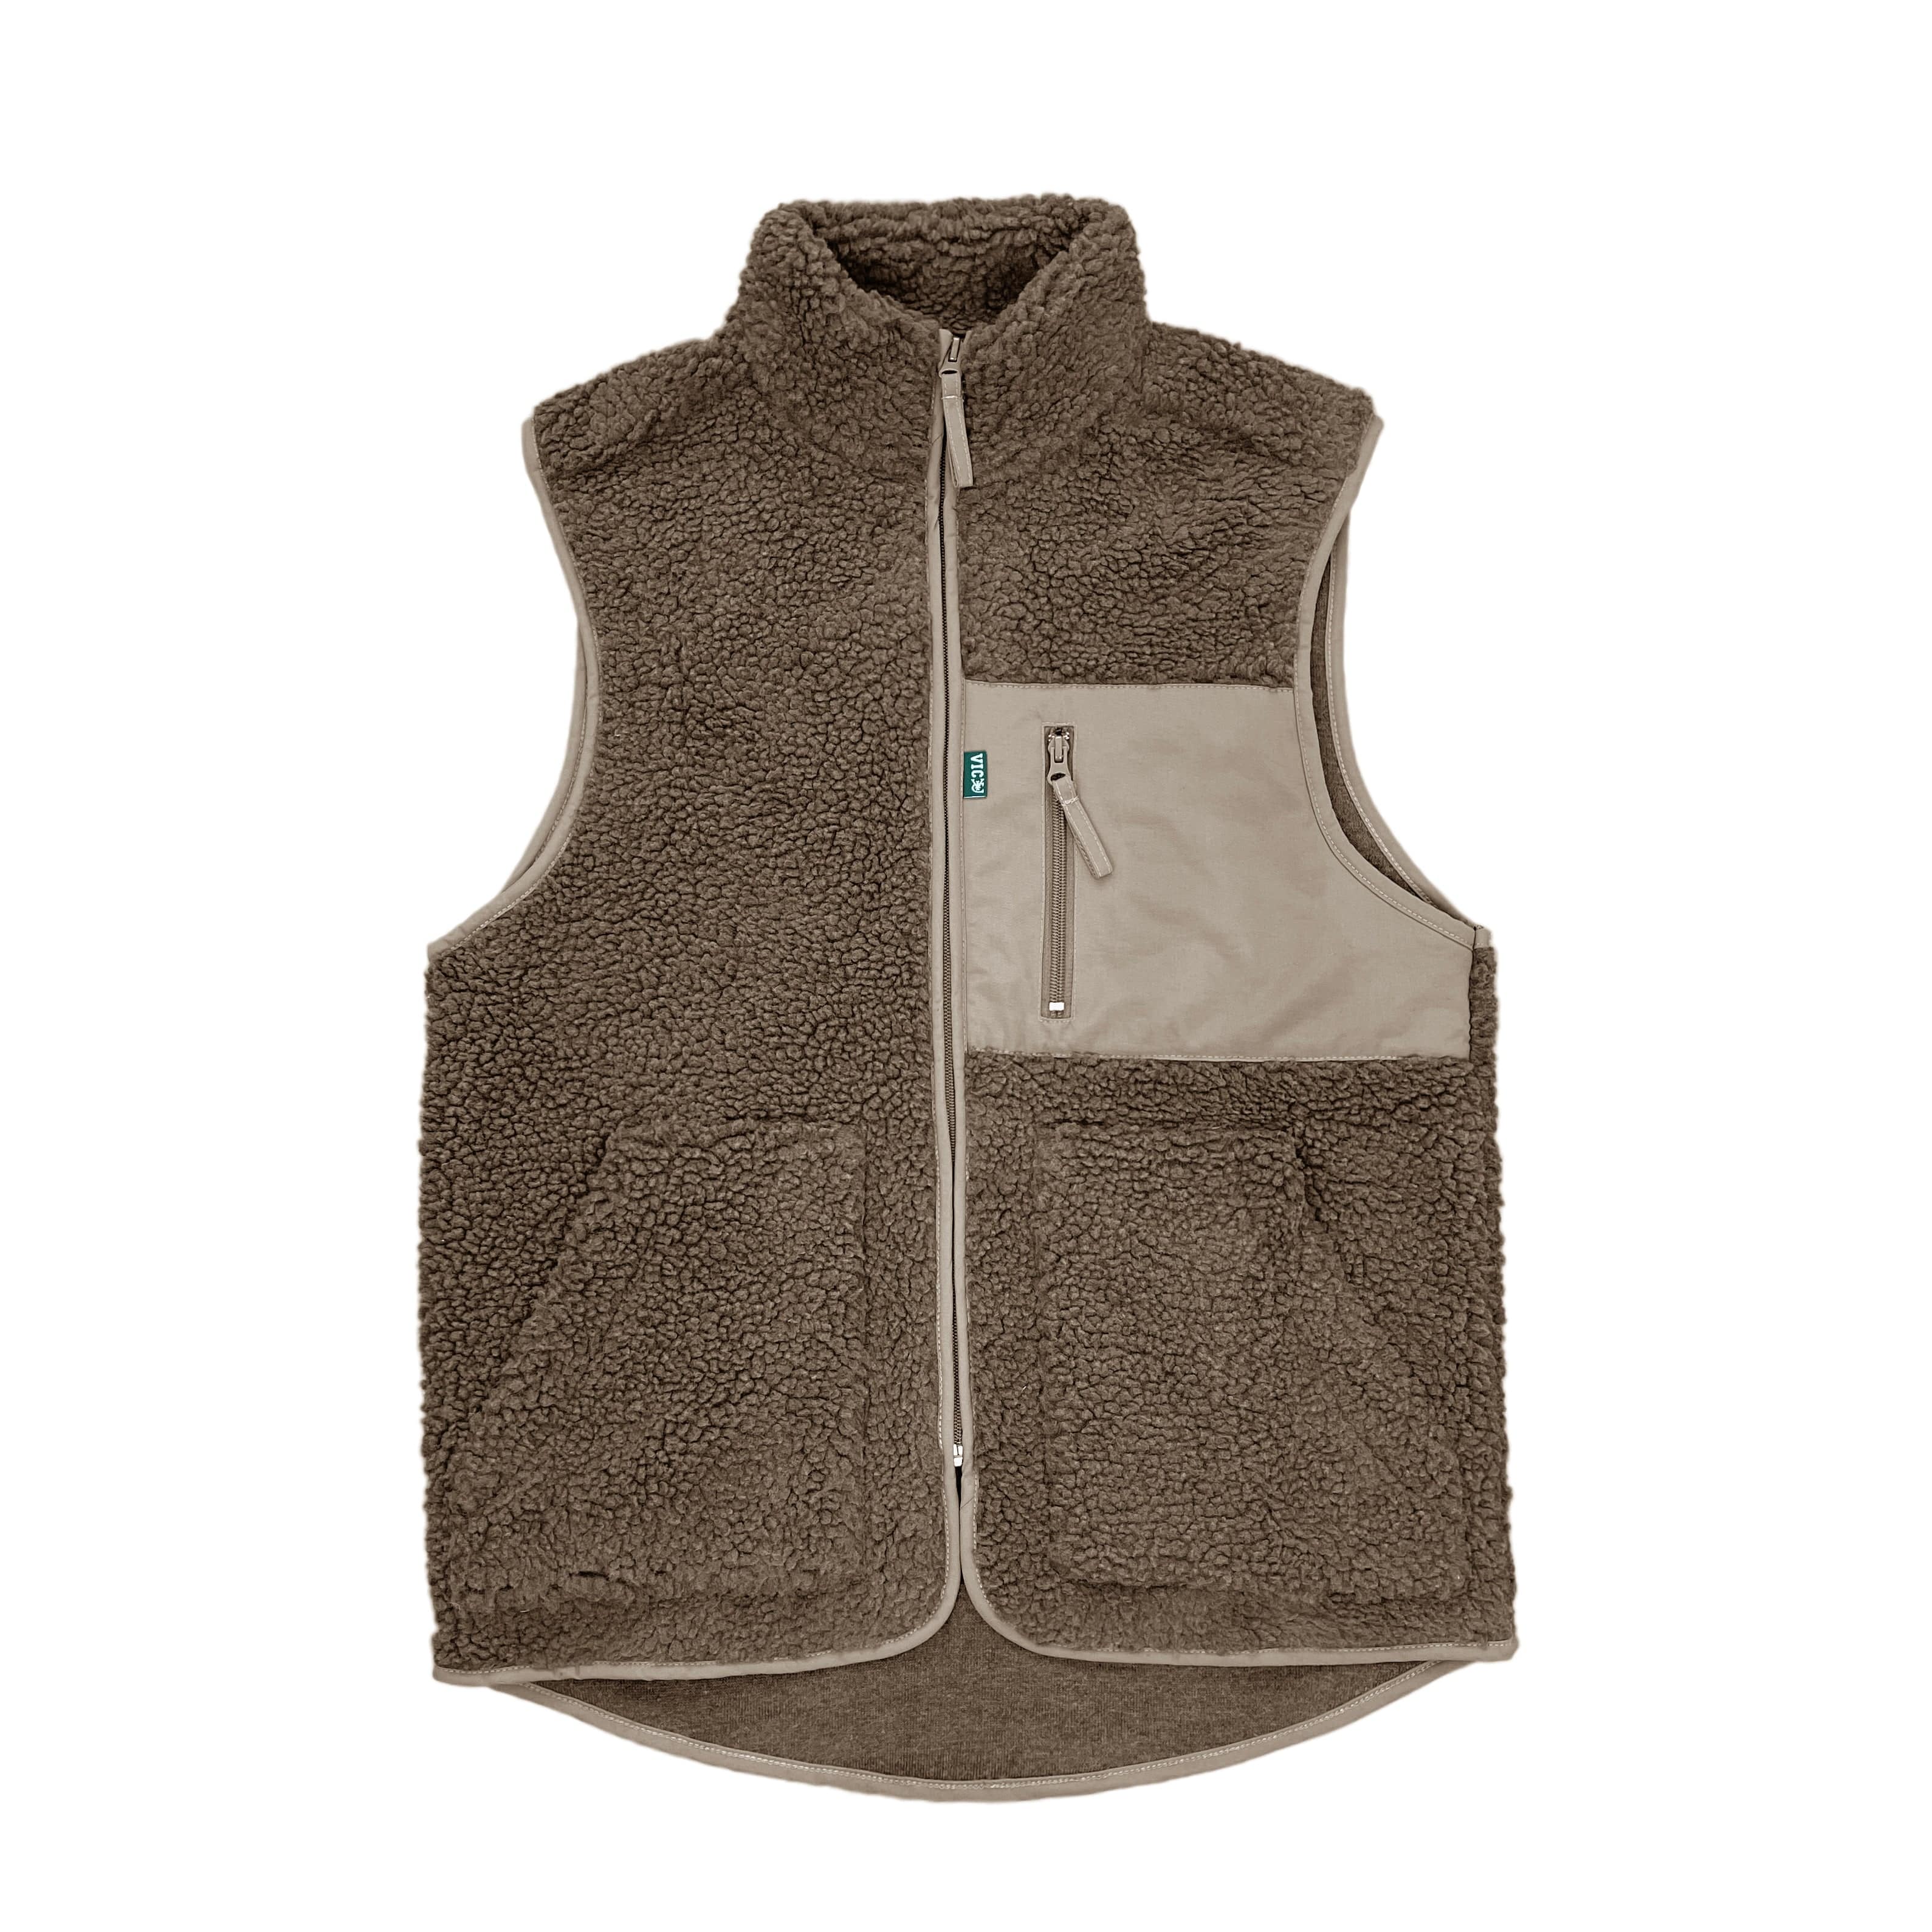 sherpa pile fleece vest. classic vintage style